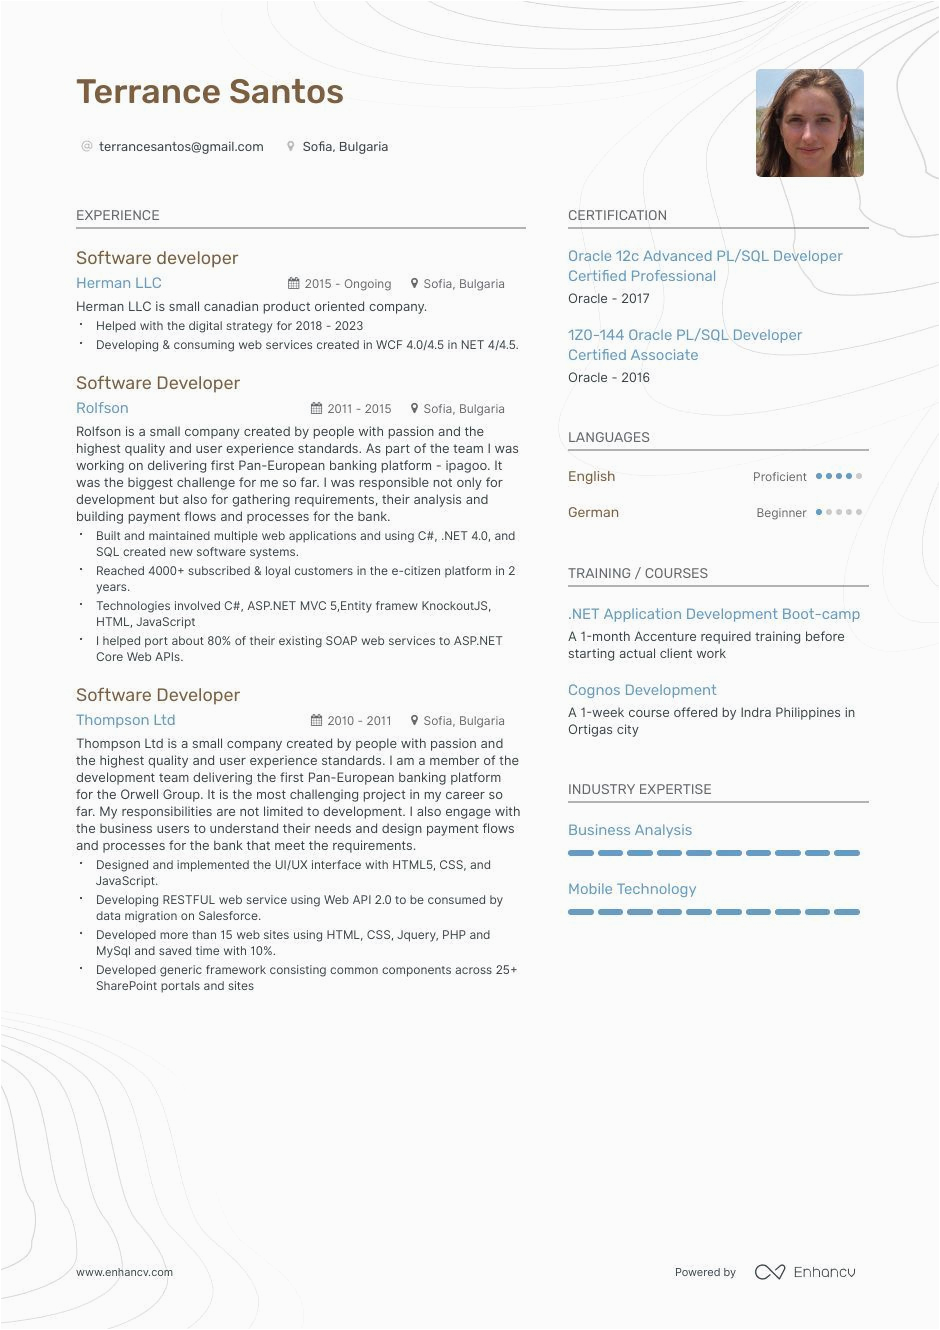 Caremark Java Developer Resume with as400 Samples Accenture Resume Builder Login Medicamentomelatonin Info